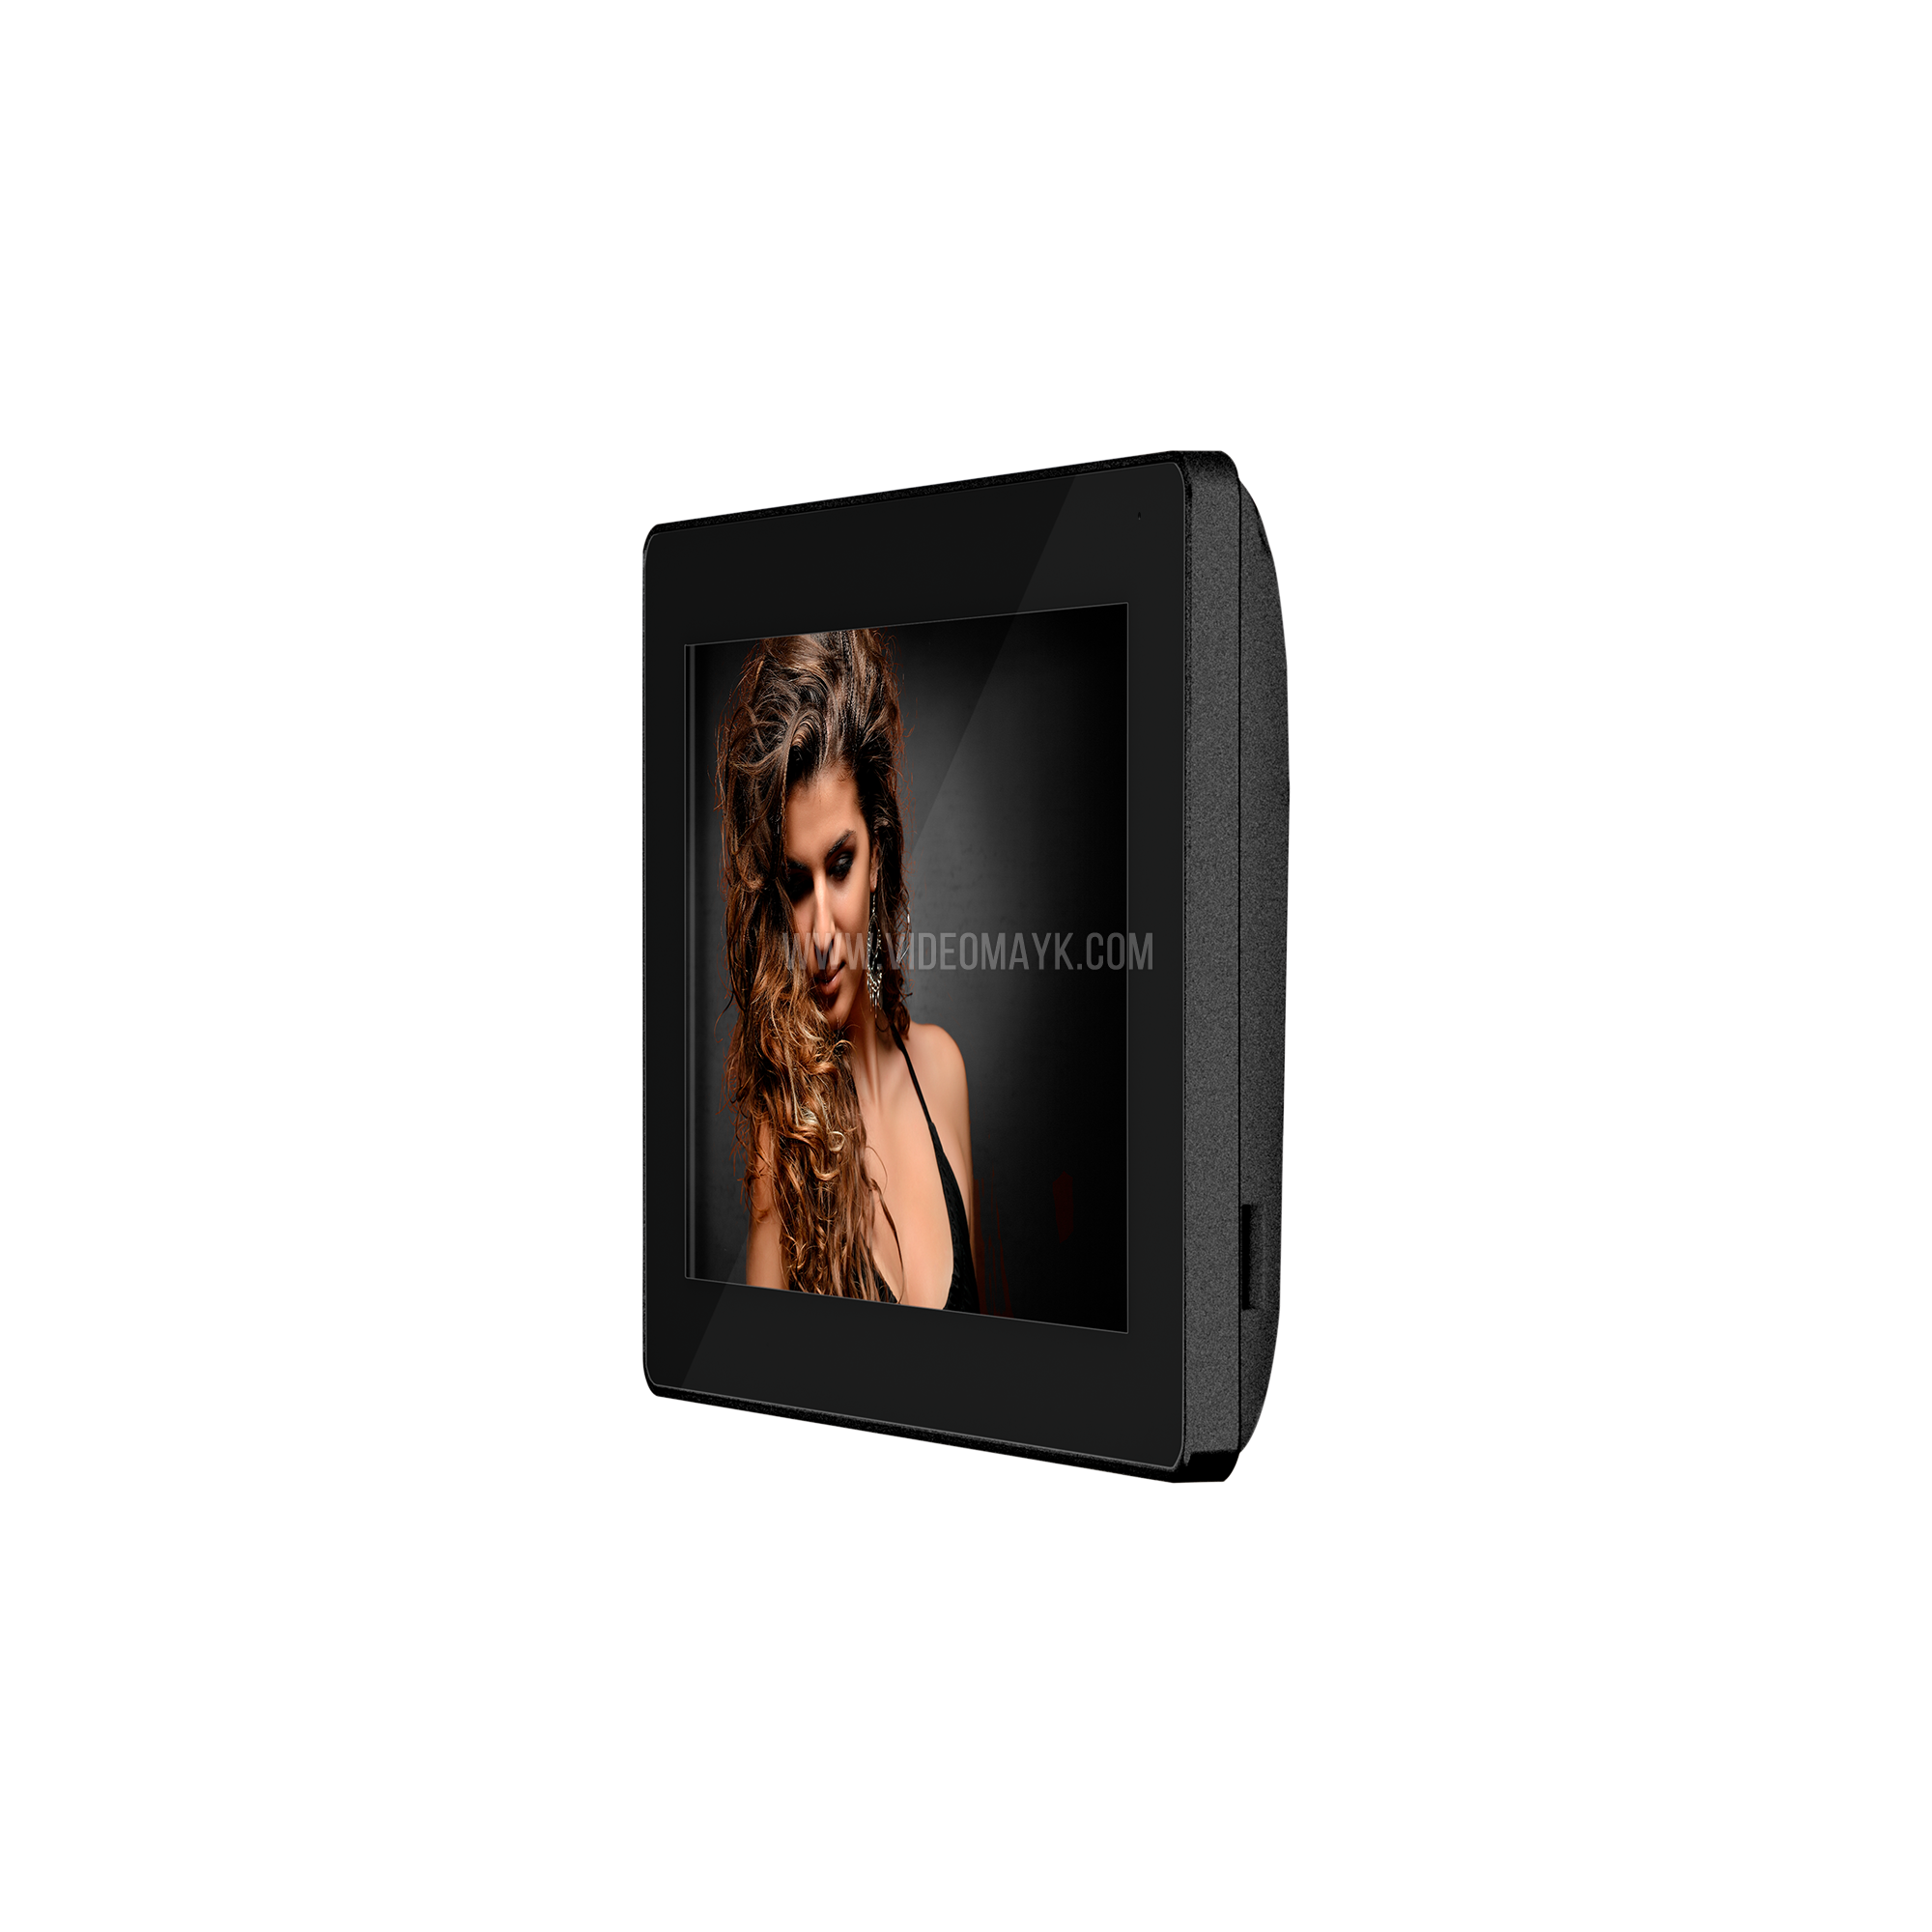 FREEDOM 7 FHD WIFI NIGHT - Full HD видеодомофон с сенсорным дисплеем 7", записью и переадресацией вызова на смартфон Версия: 4478